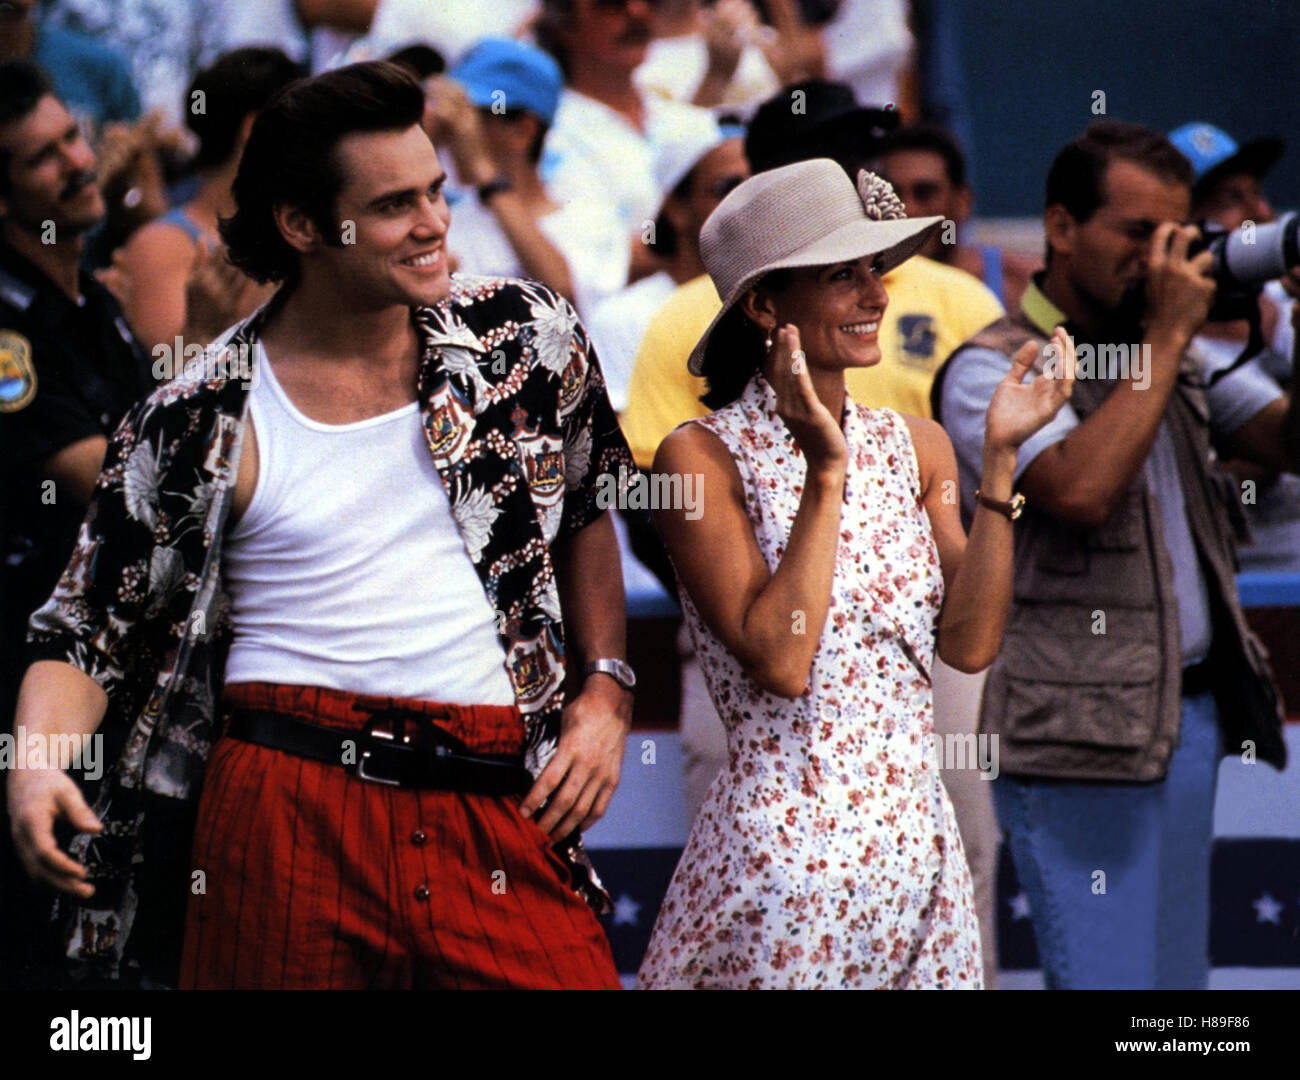 Ace Ventura - Ein tierischer Detektiv, (Ace Ventura: l'Acchiappanimali) USA 1994, Regie: Tom Shadyac, Jim Carrey, COURTENEY COX Stichwort: Hawai-Hemd Foto Stock